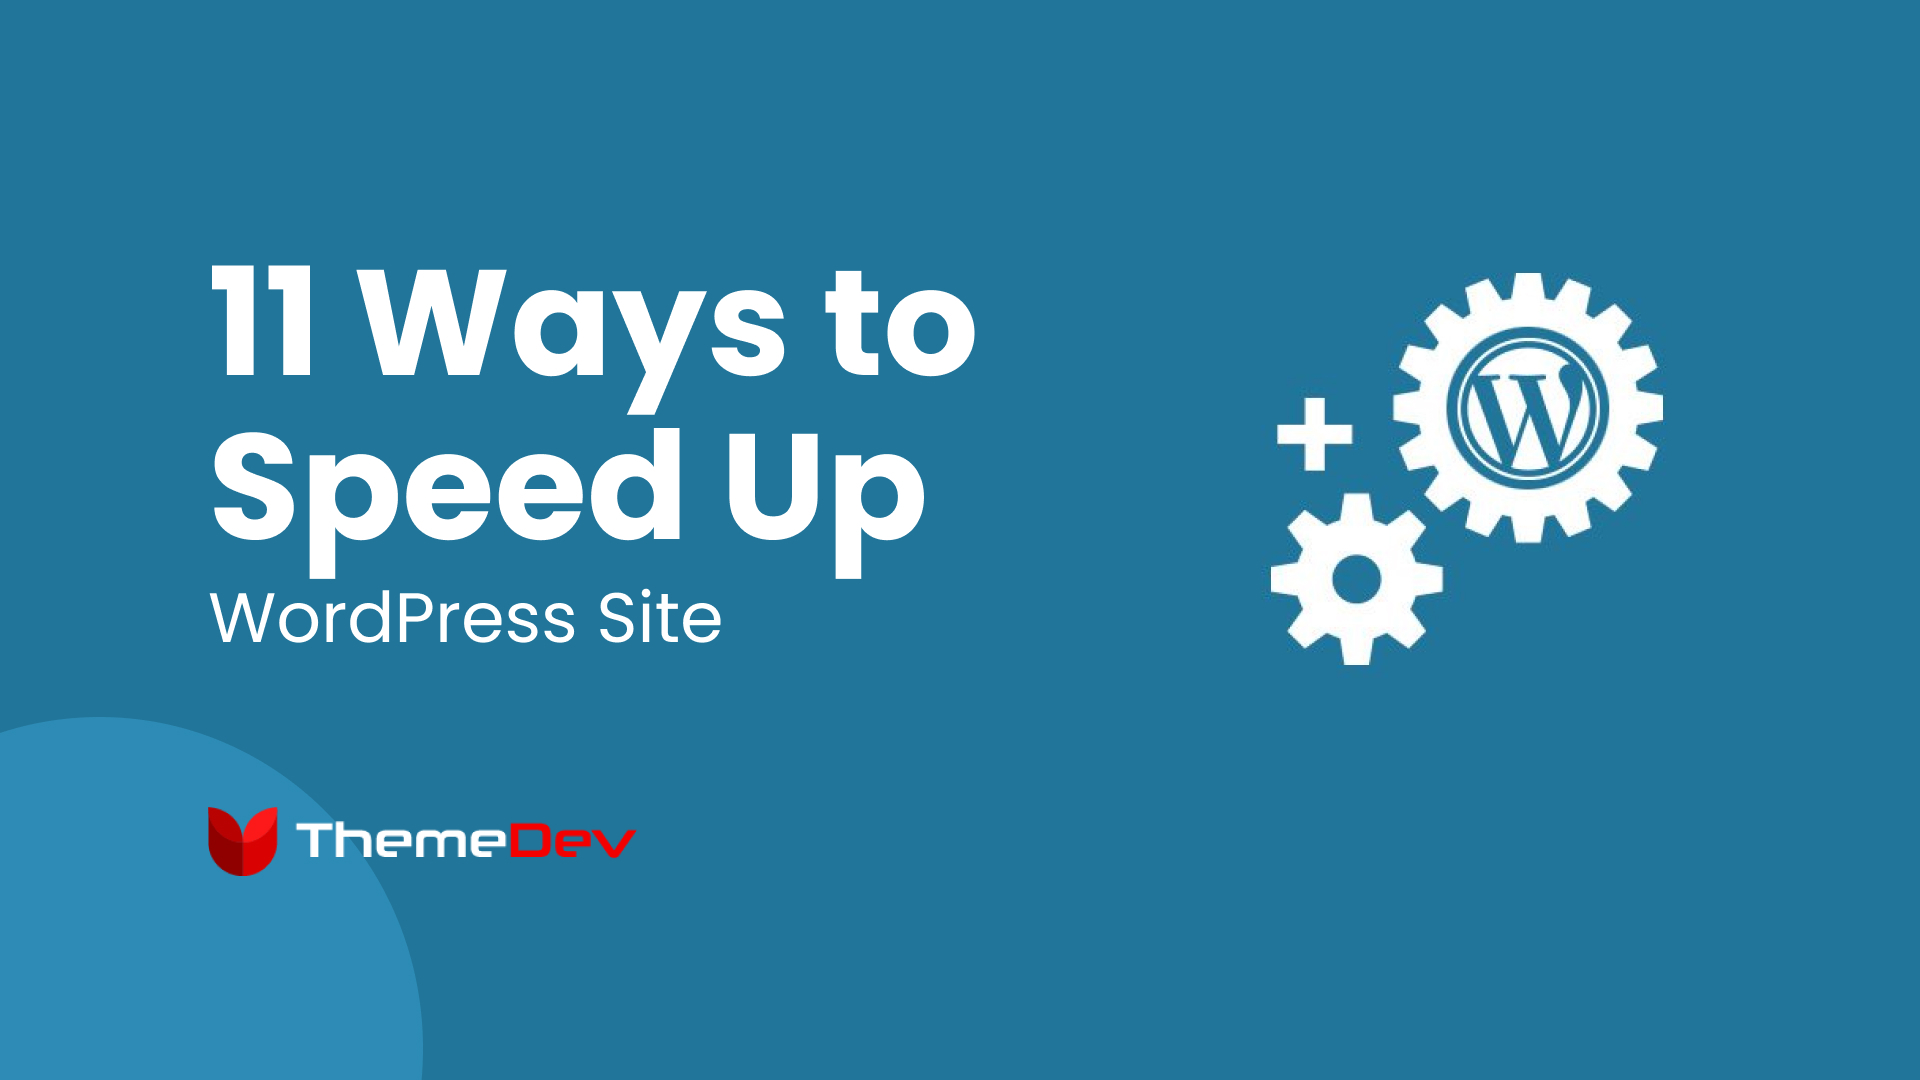 11 Top Ways to Speed up WordPress Site